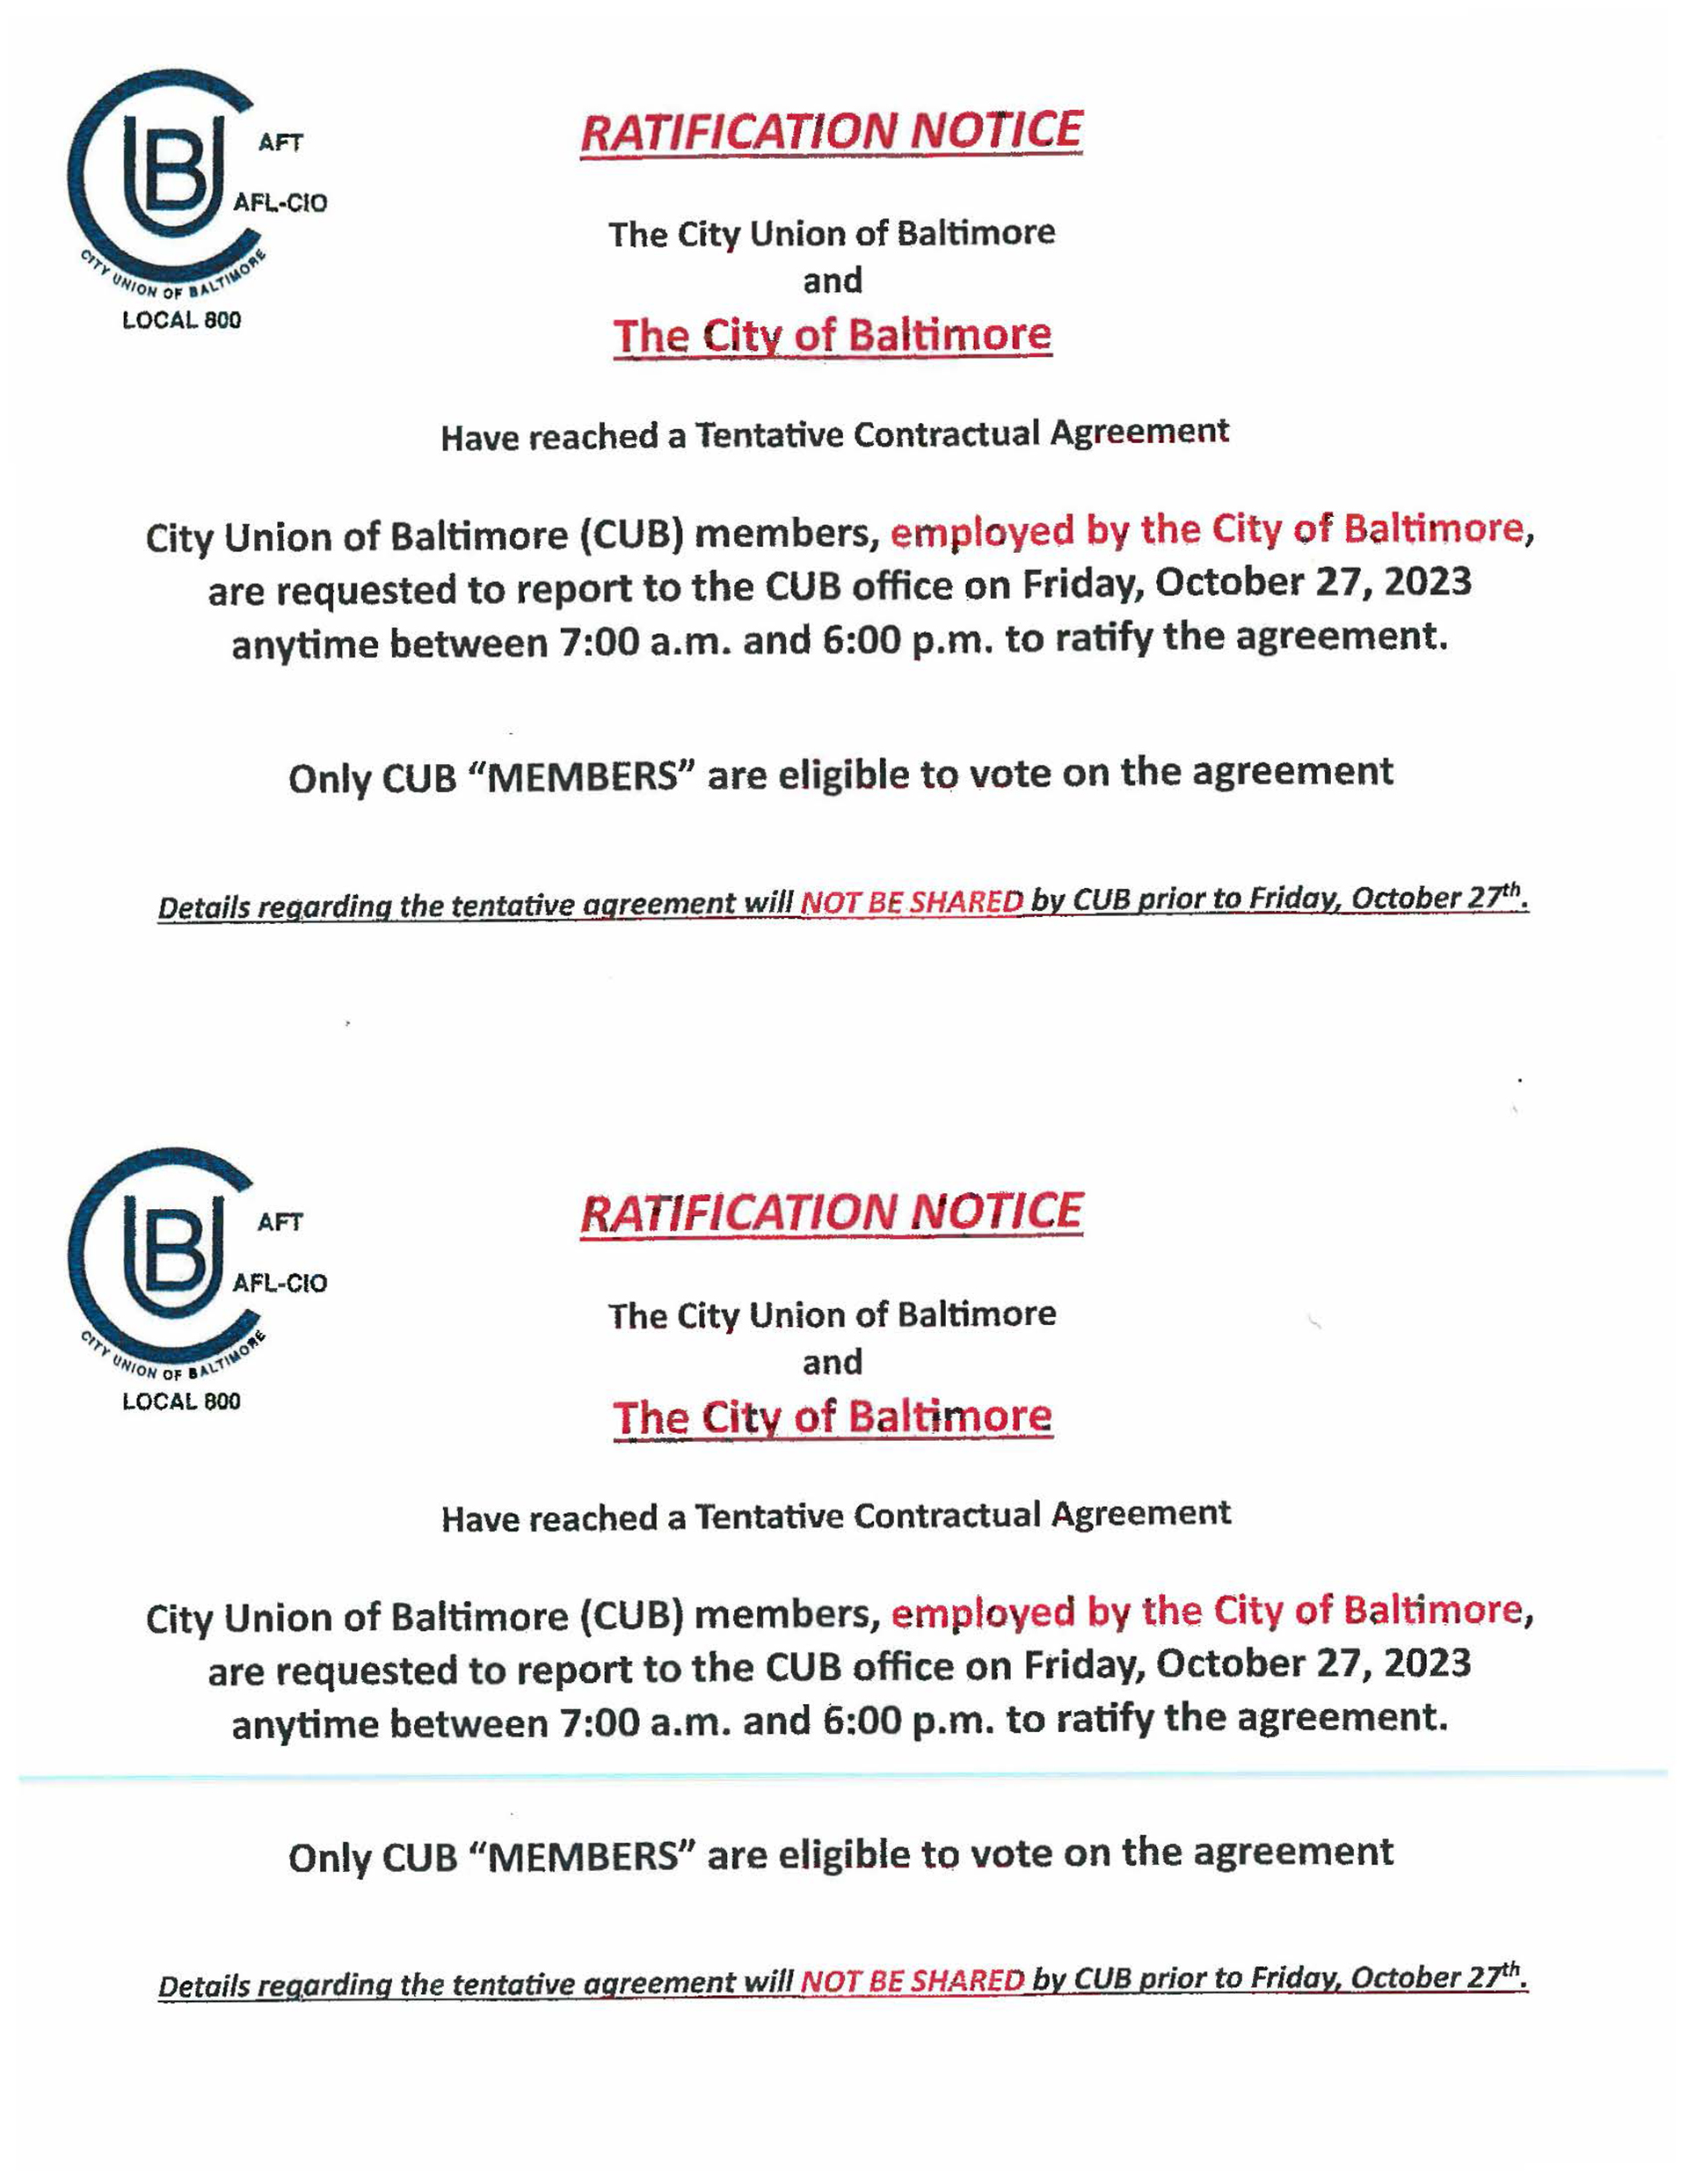 CUB ratification notice